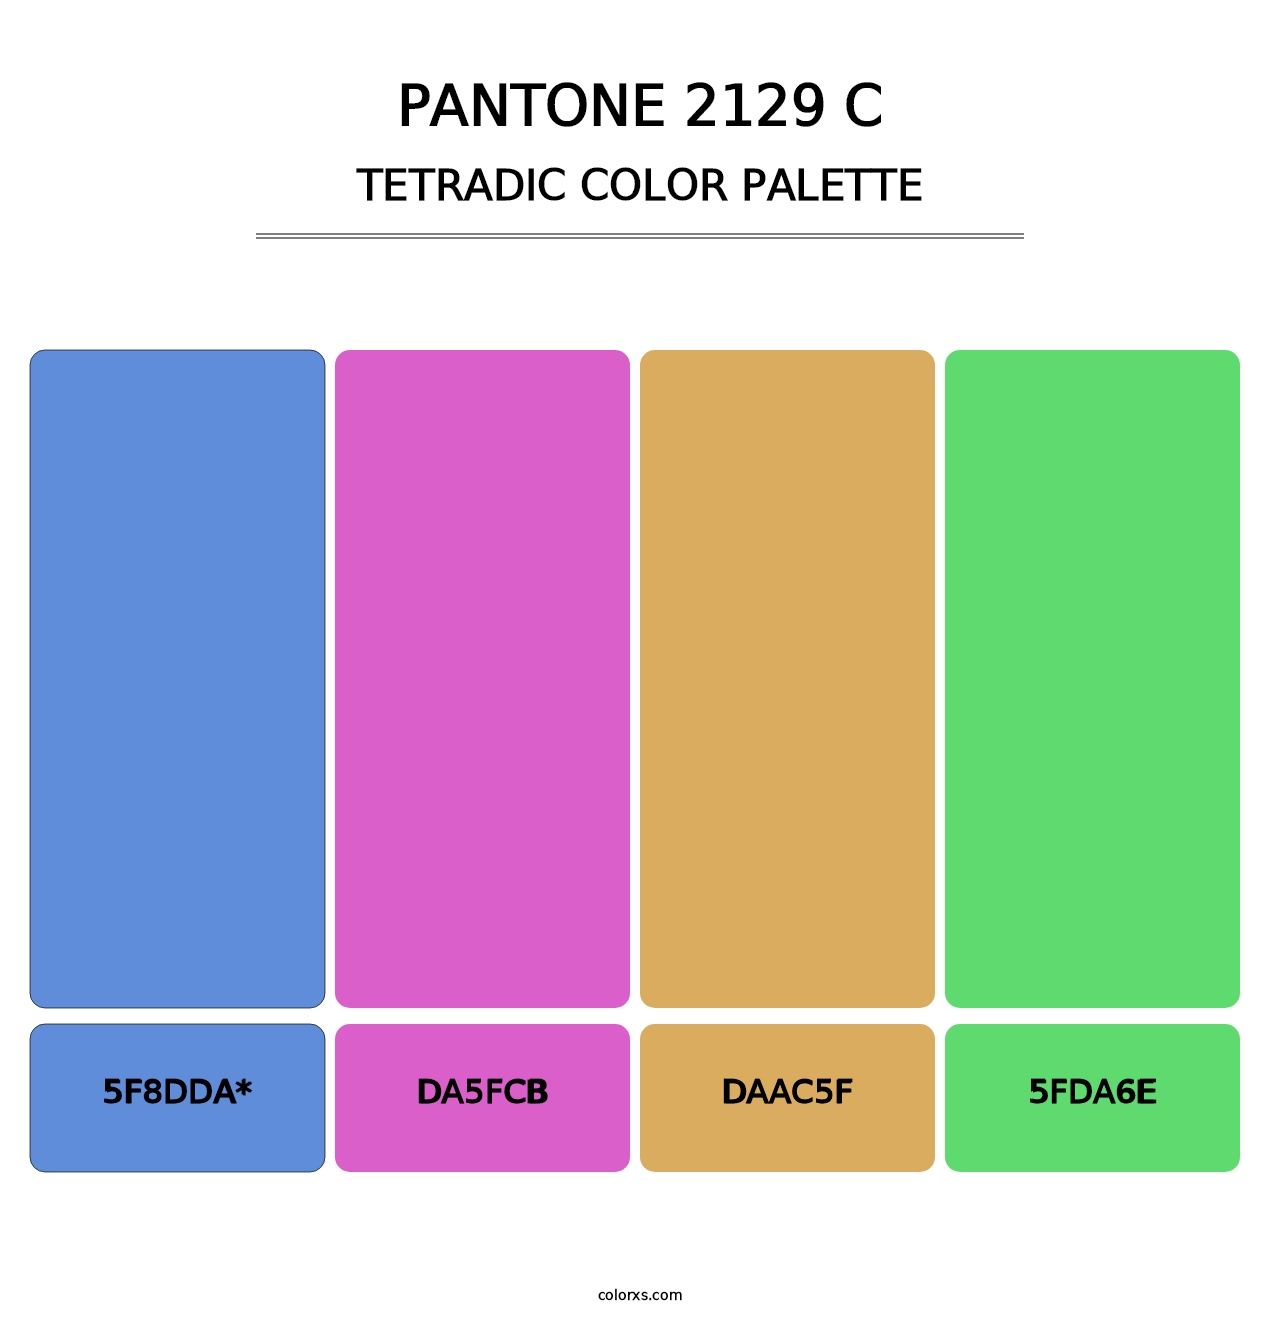 PANTONE 2129 C - Tetradic Color Palette